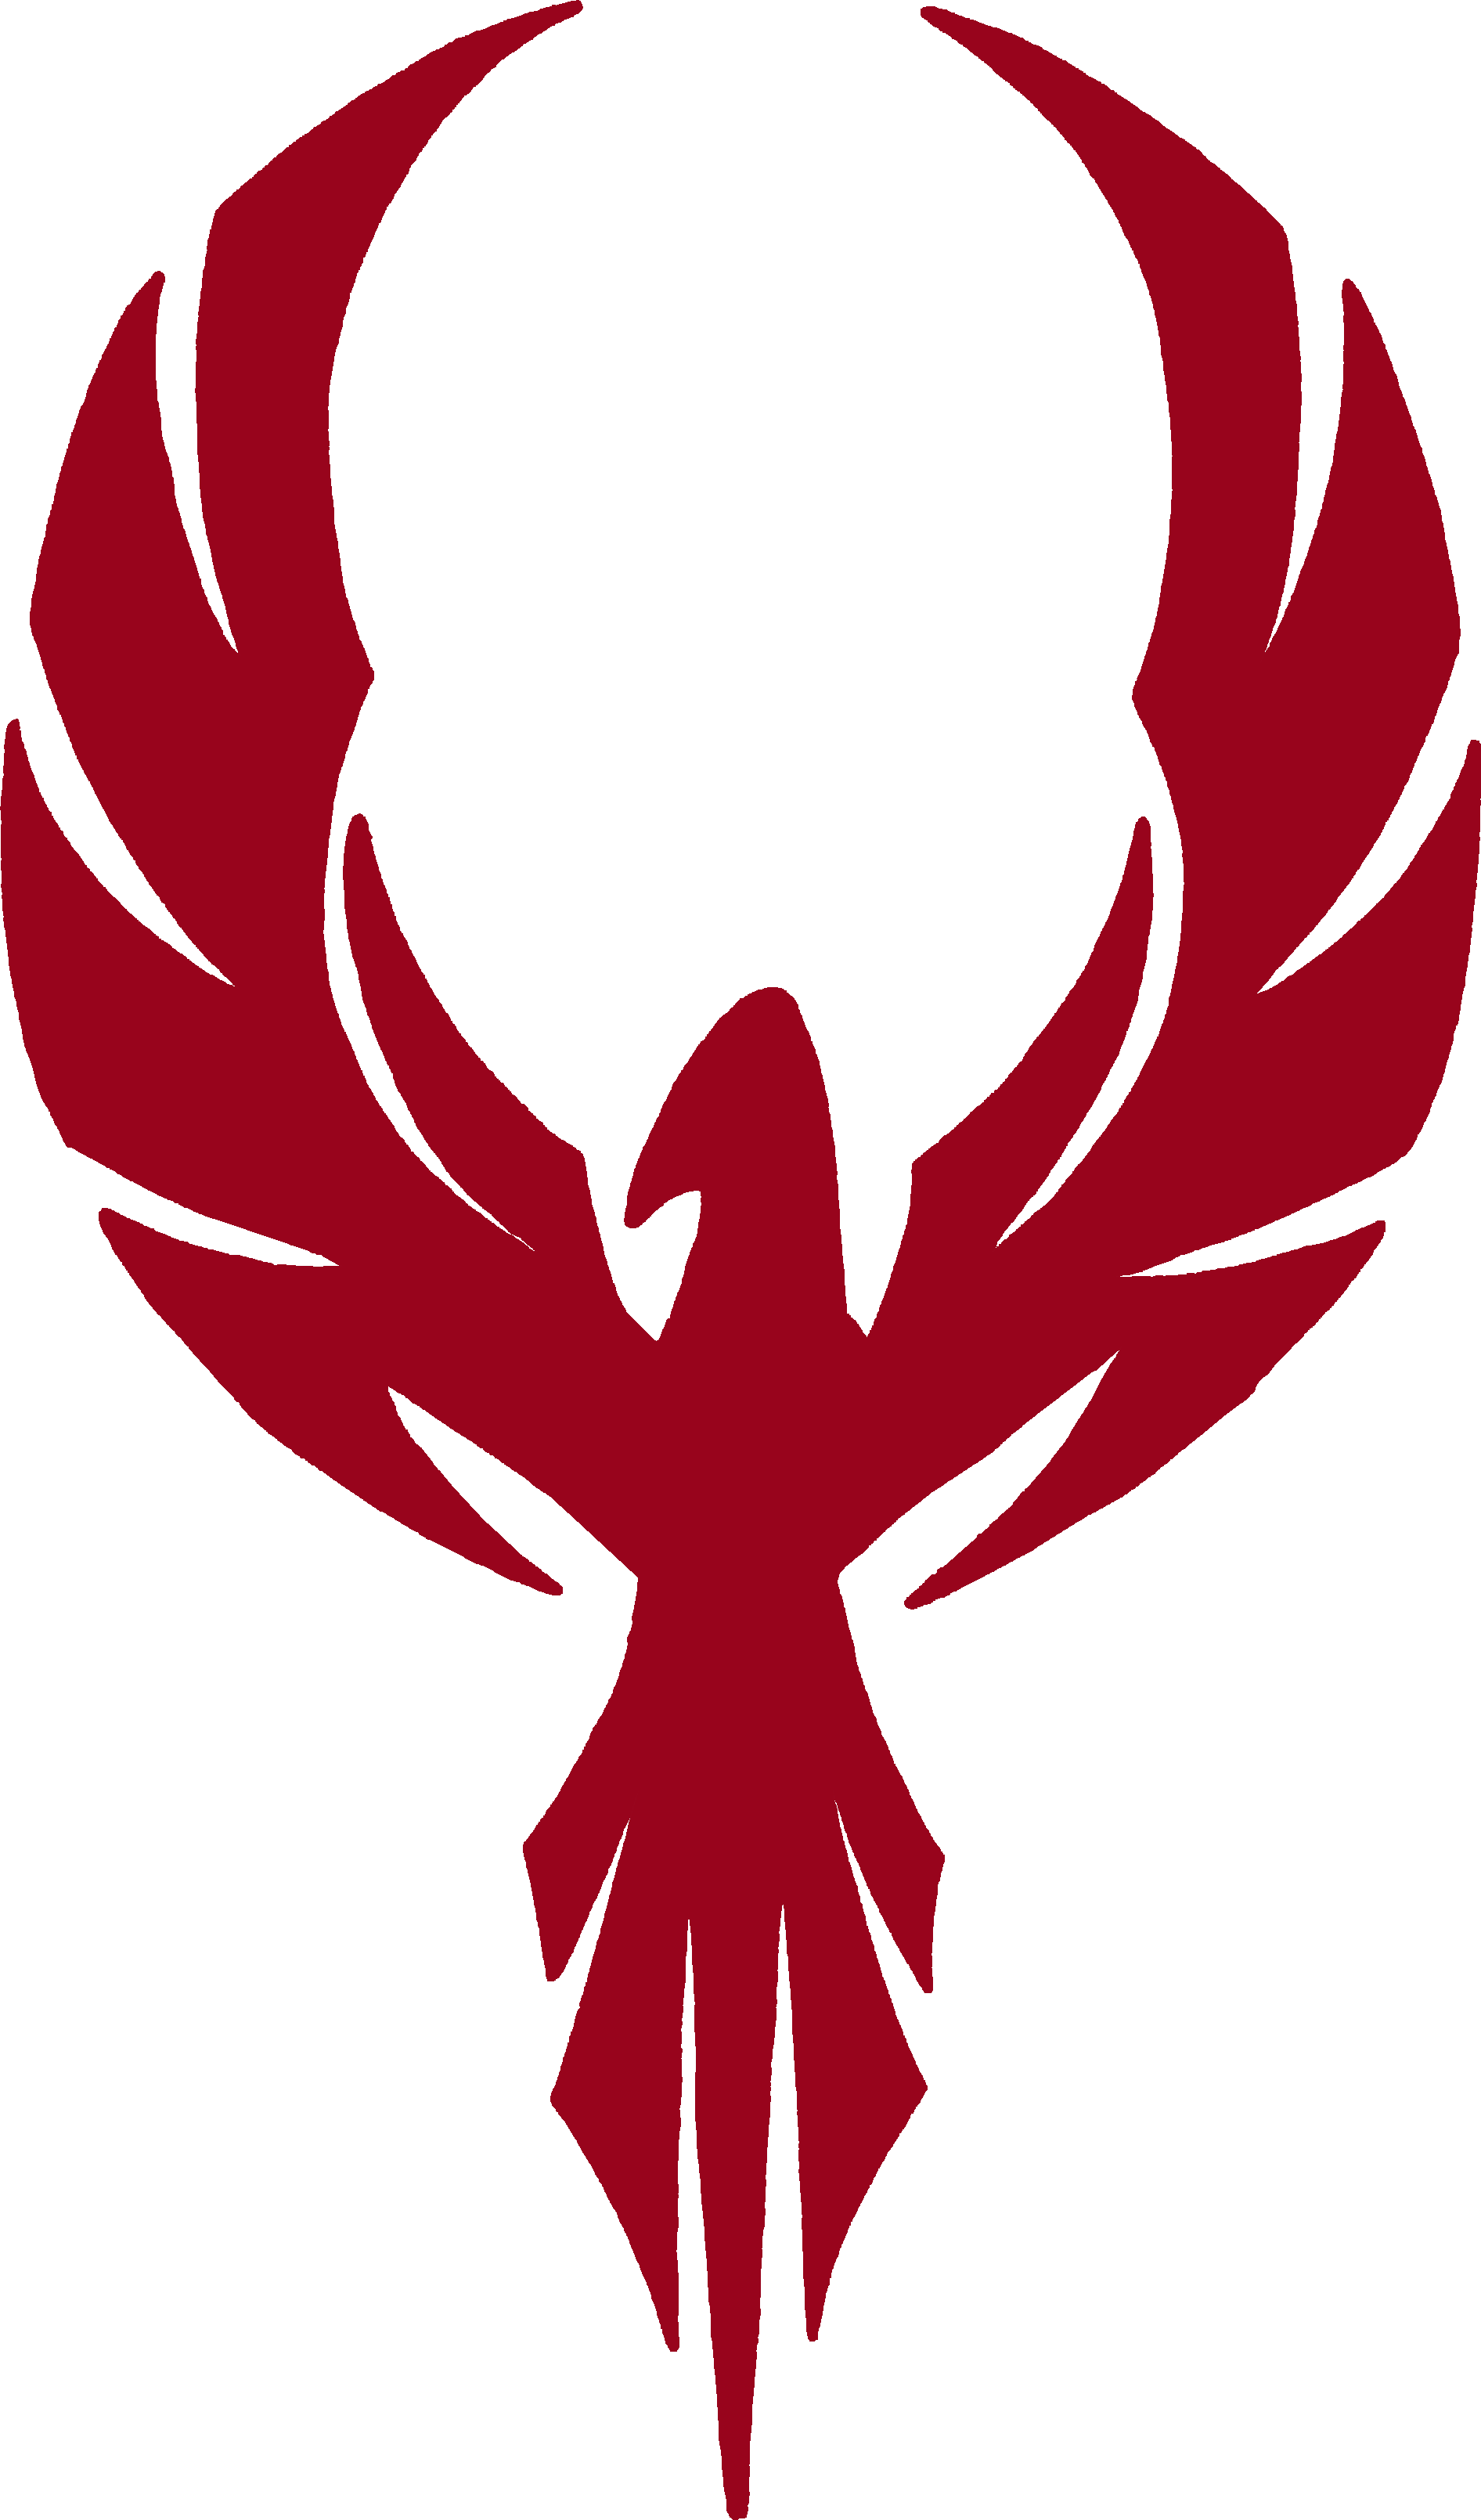 Wing clipart tribal. Phoenix rebellion symbol spray